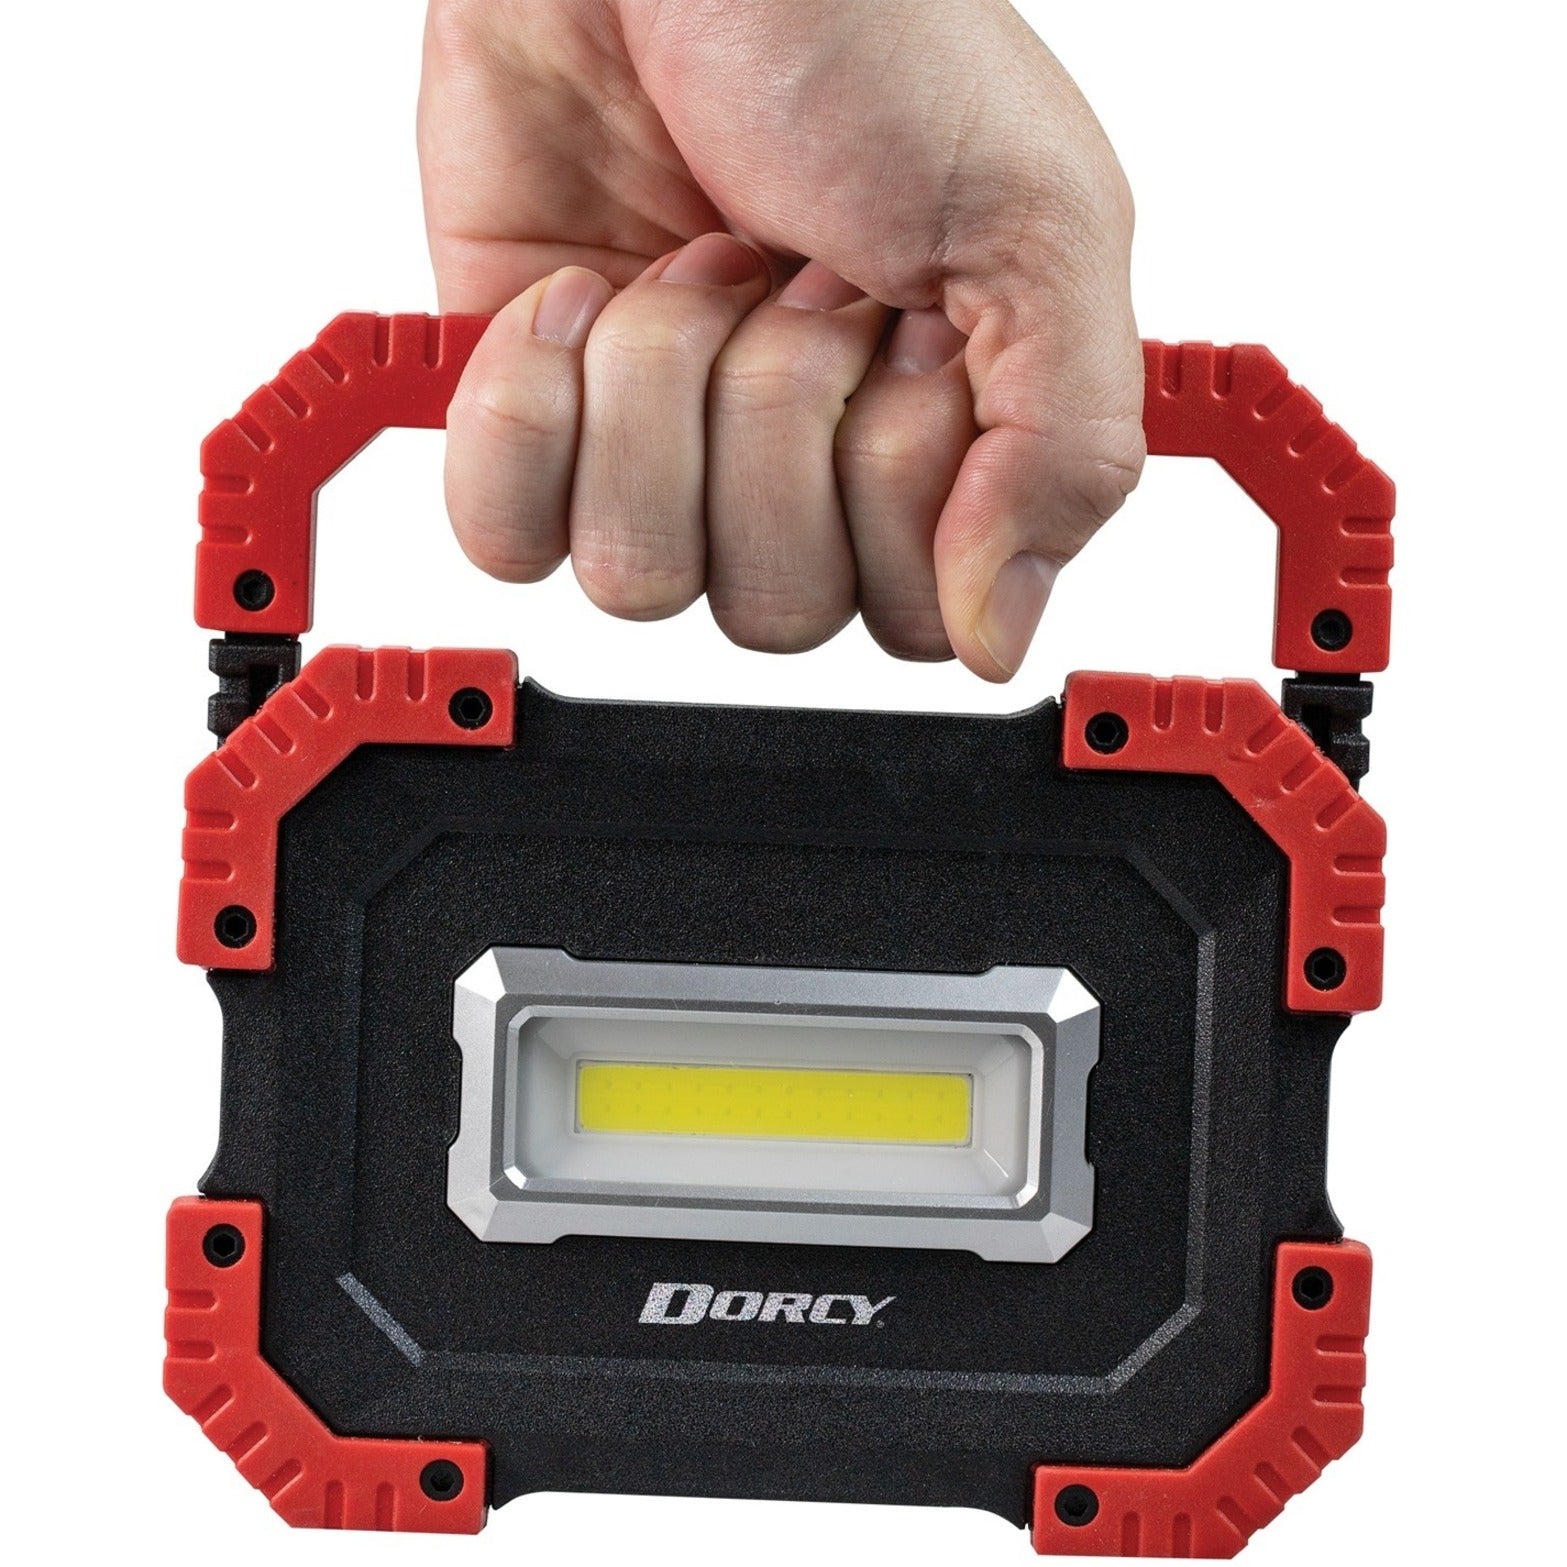 Dorcy 41-4336 Ultra HD Rechargeable Utility Light + Power Bank, 1500 Lumen, USB Charging Port, Drop Resistant, Weather Resistant, Water Resistant, Impact Resistant